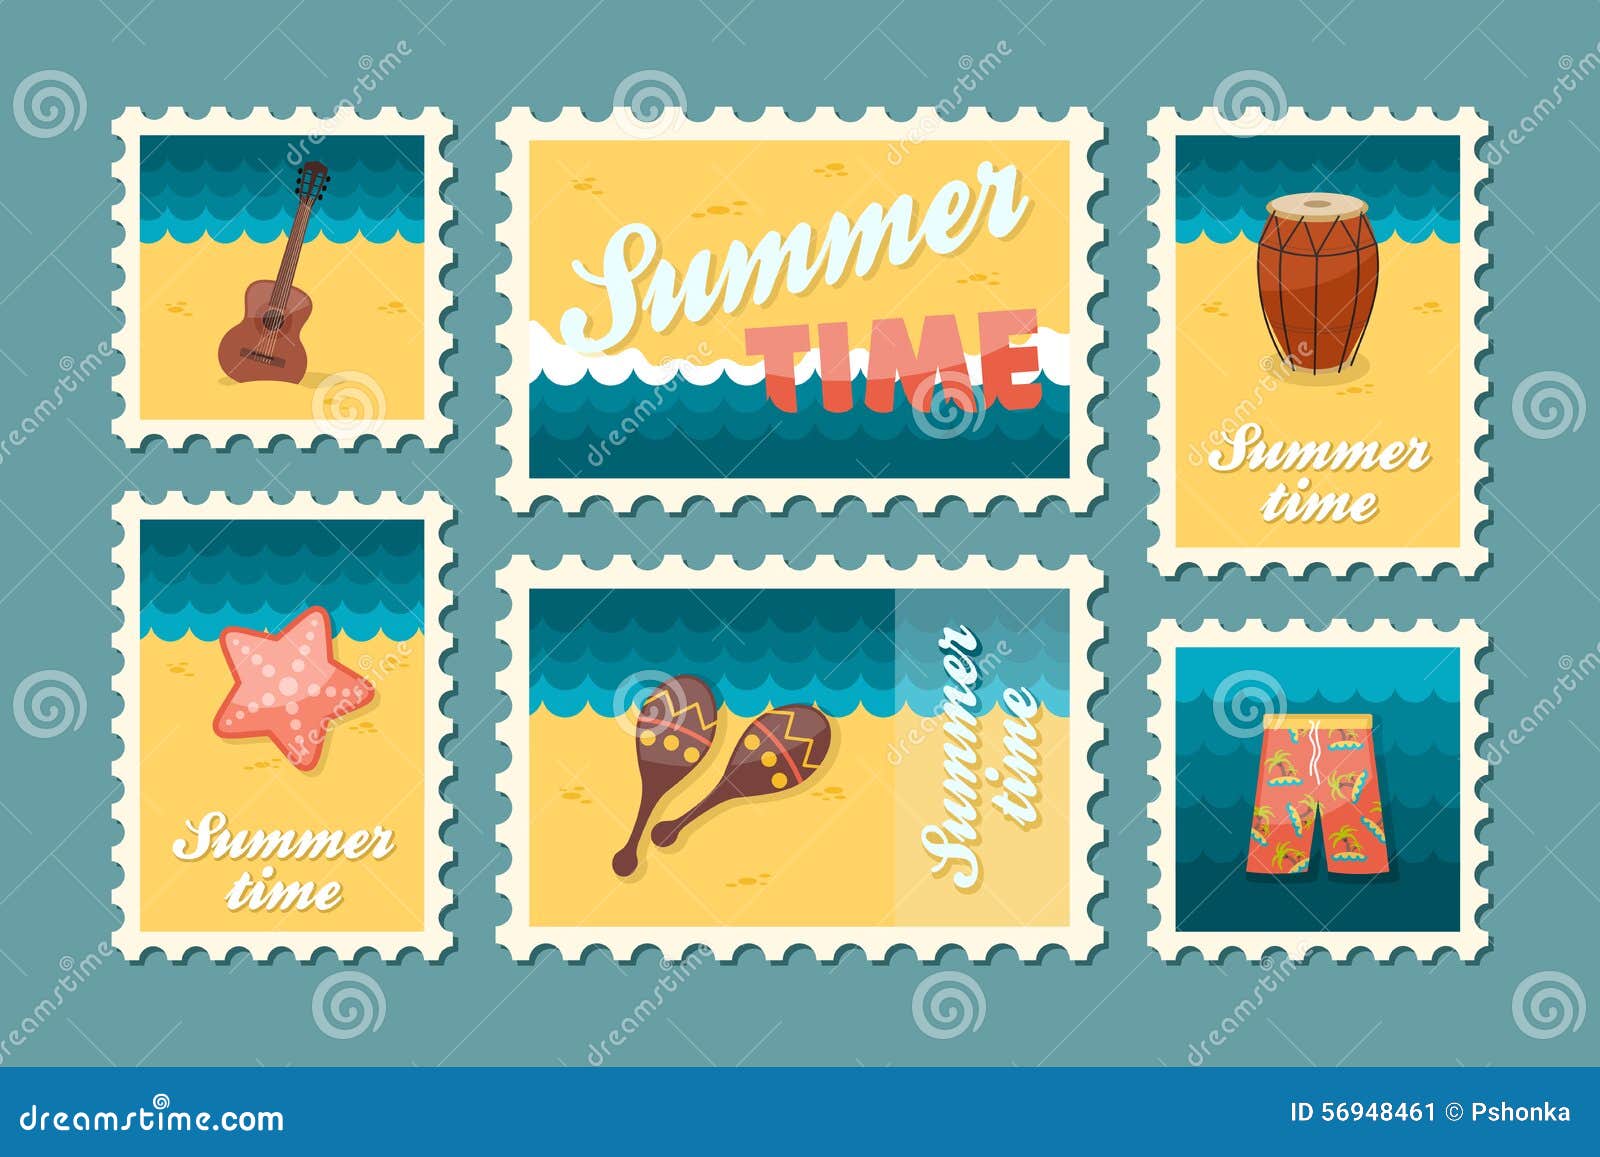 Summertime stamp set flat stock vector. Illustration of beach - 56948461